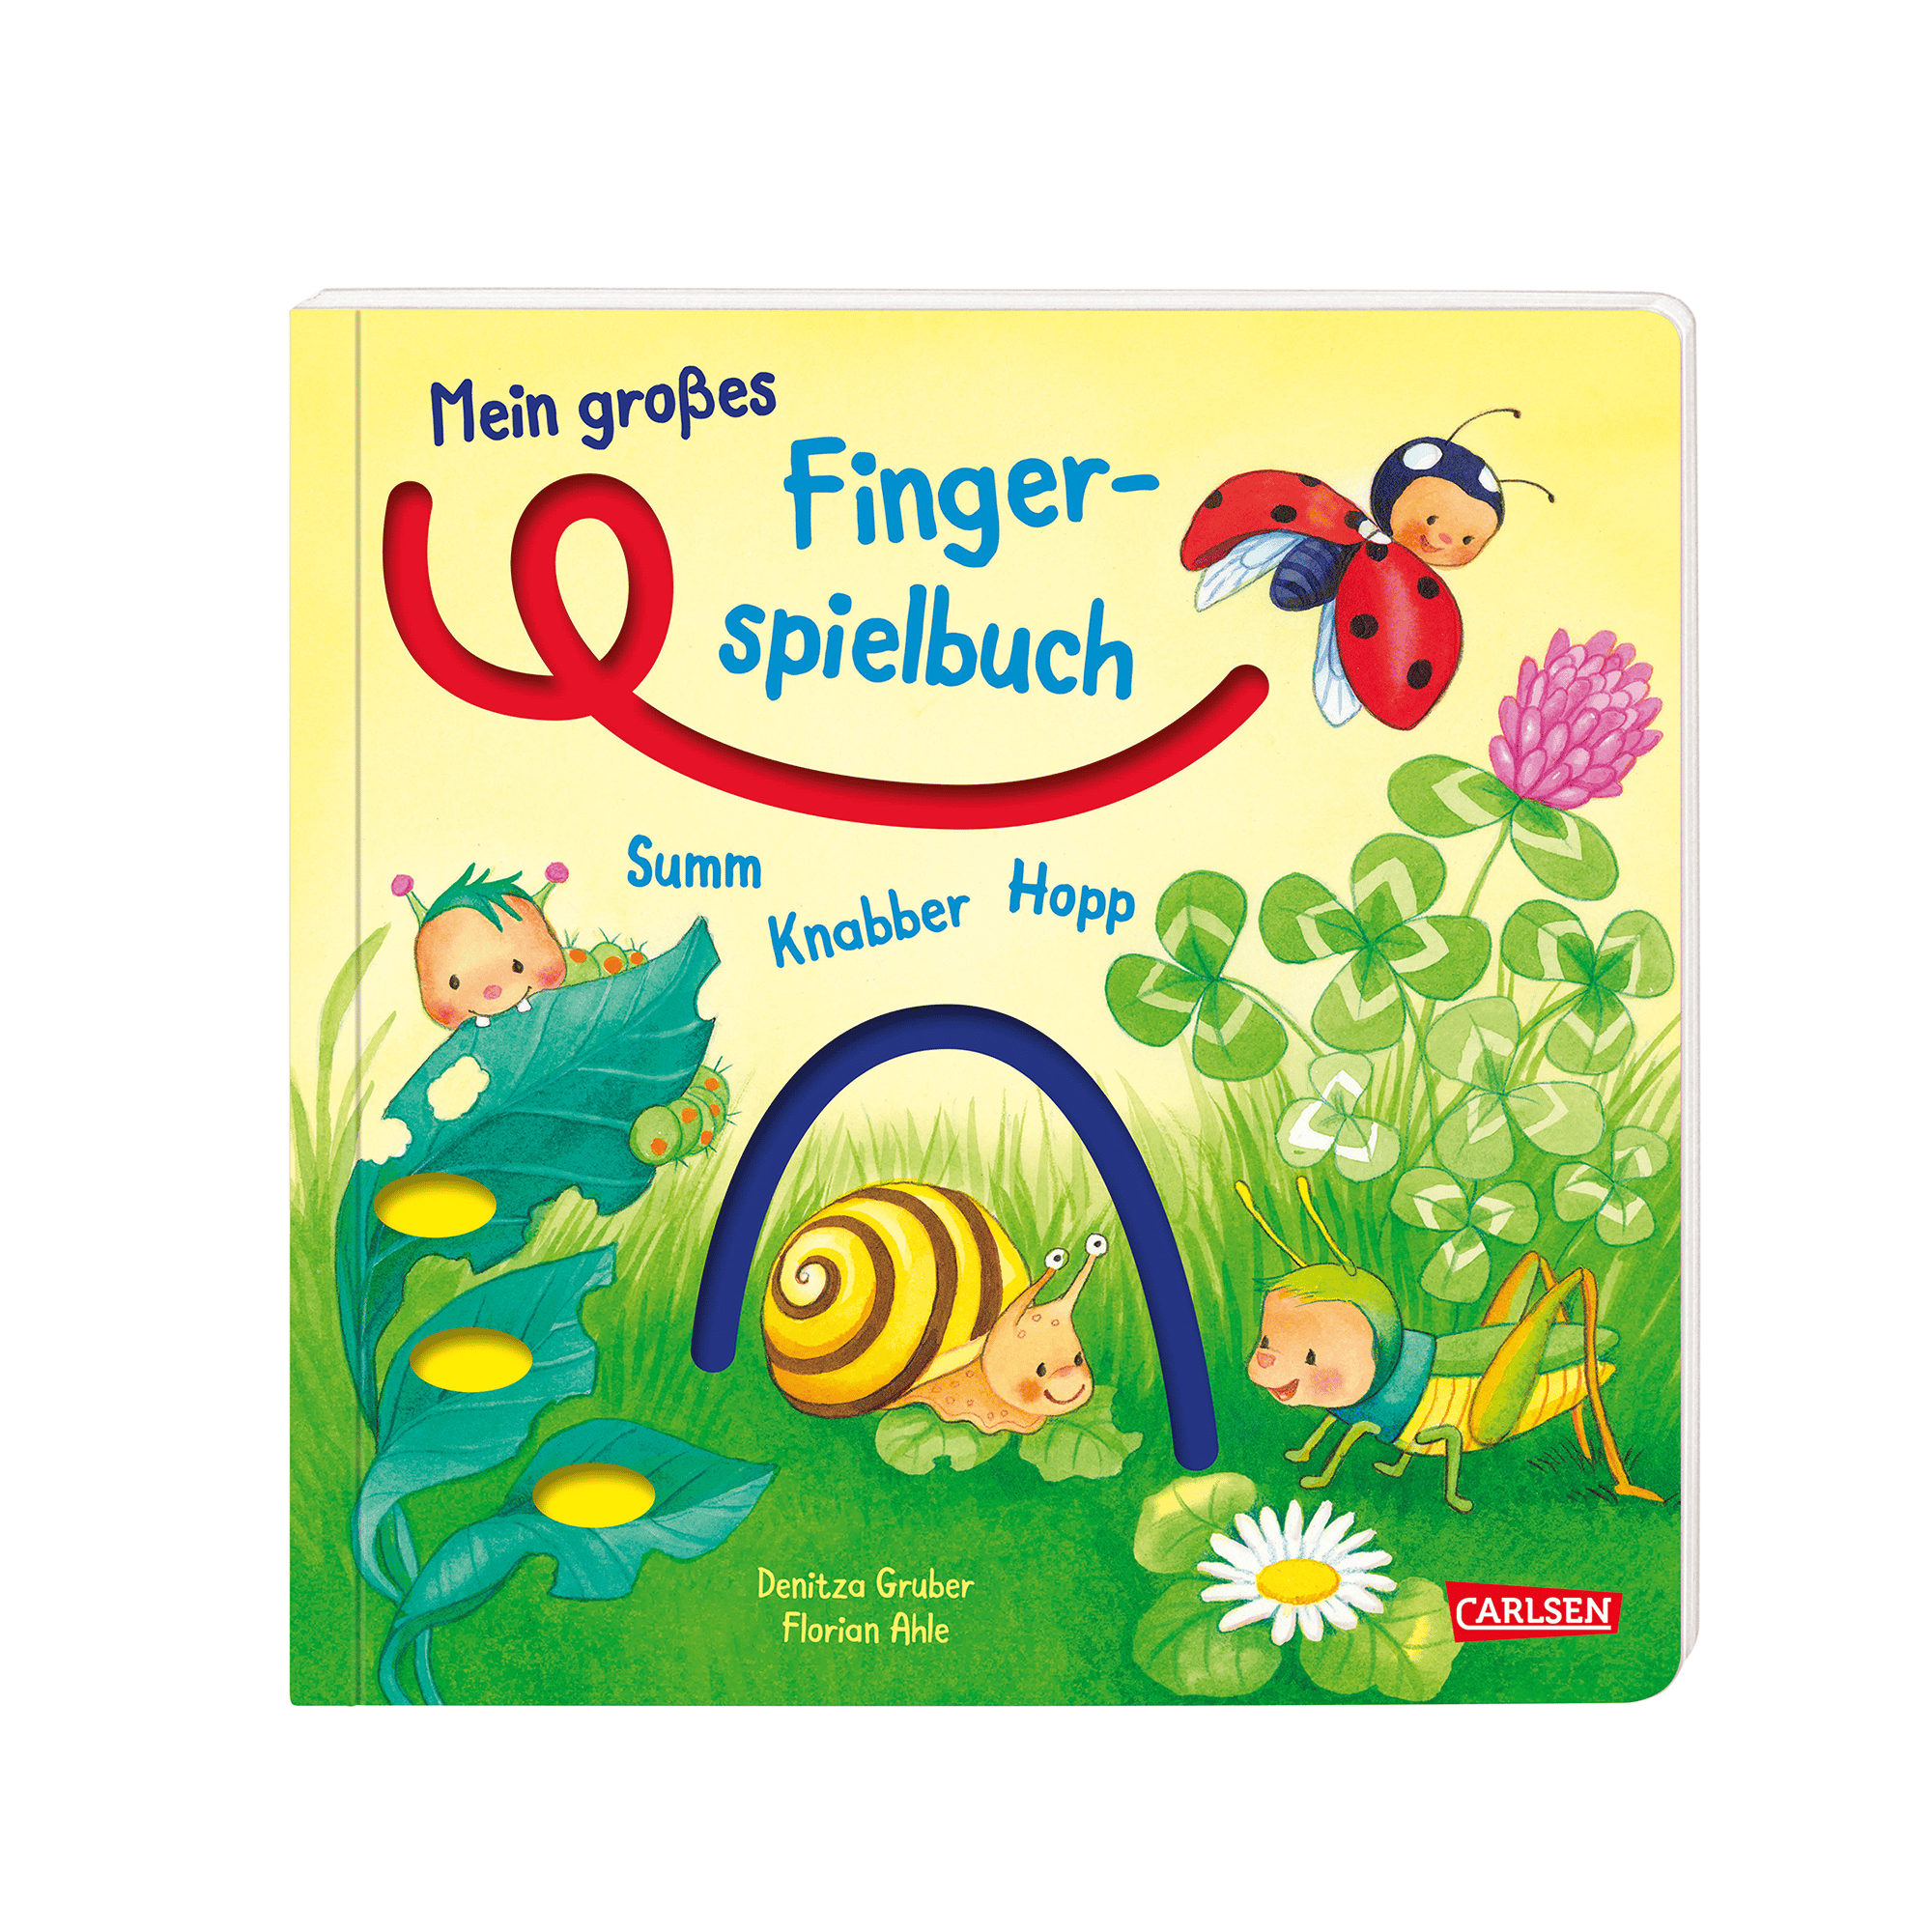 Mein großes Fingerspielbuch: Summ, knabber, hopp CARLSEN 2000579058622 1